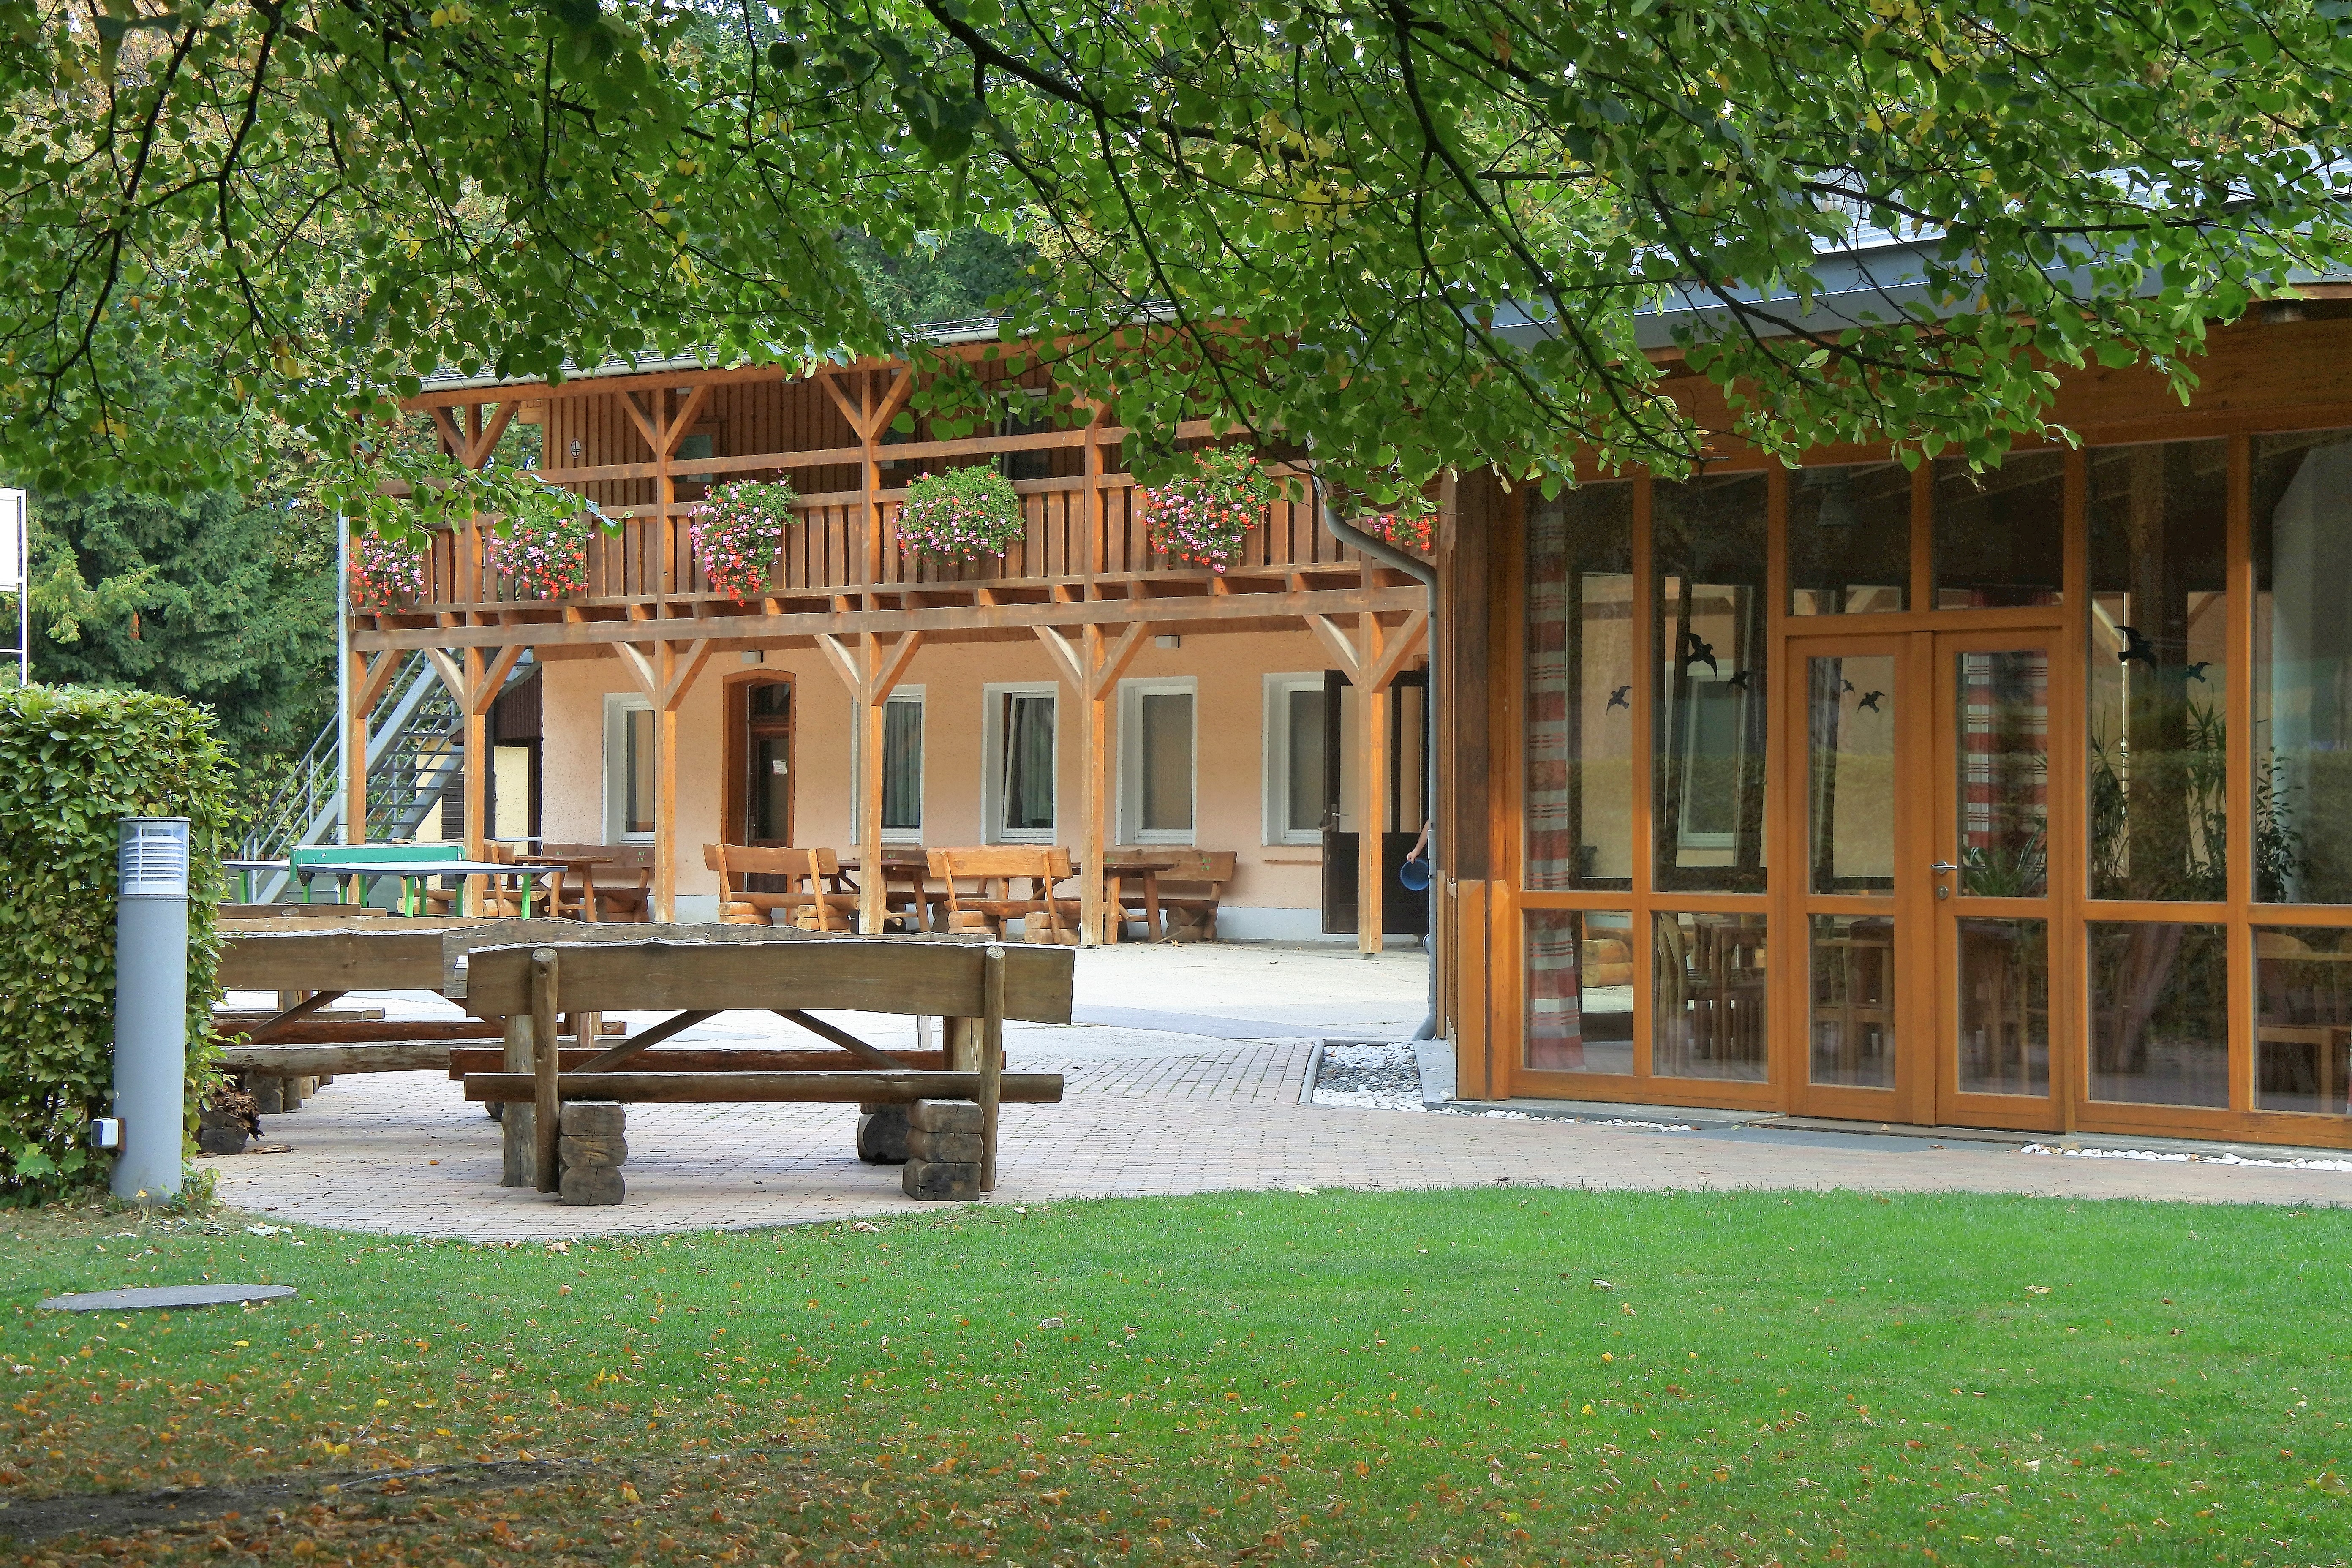 Naturfreundehaus Blankenburg 